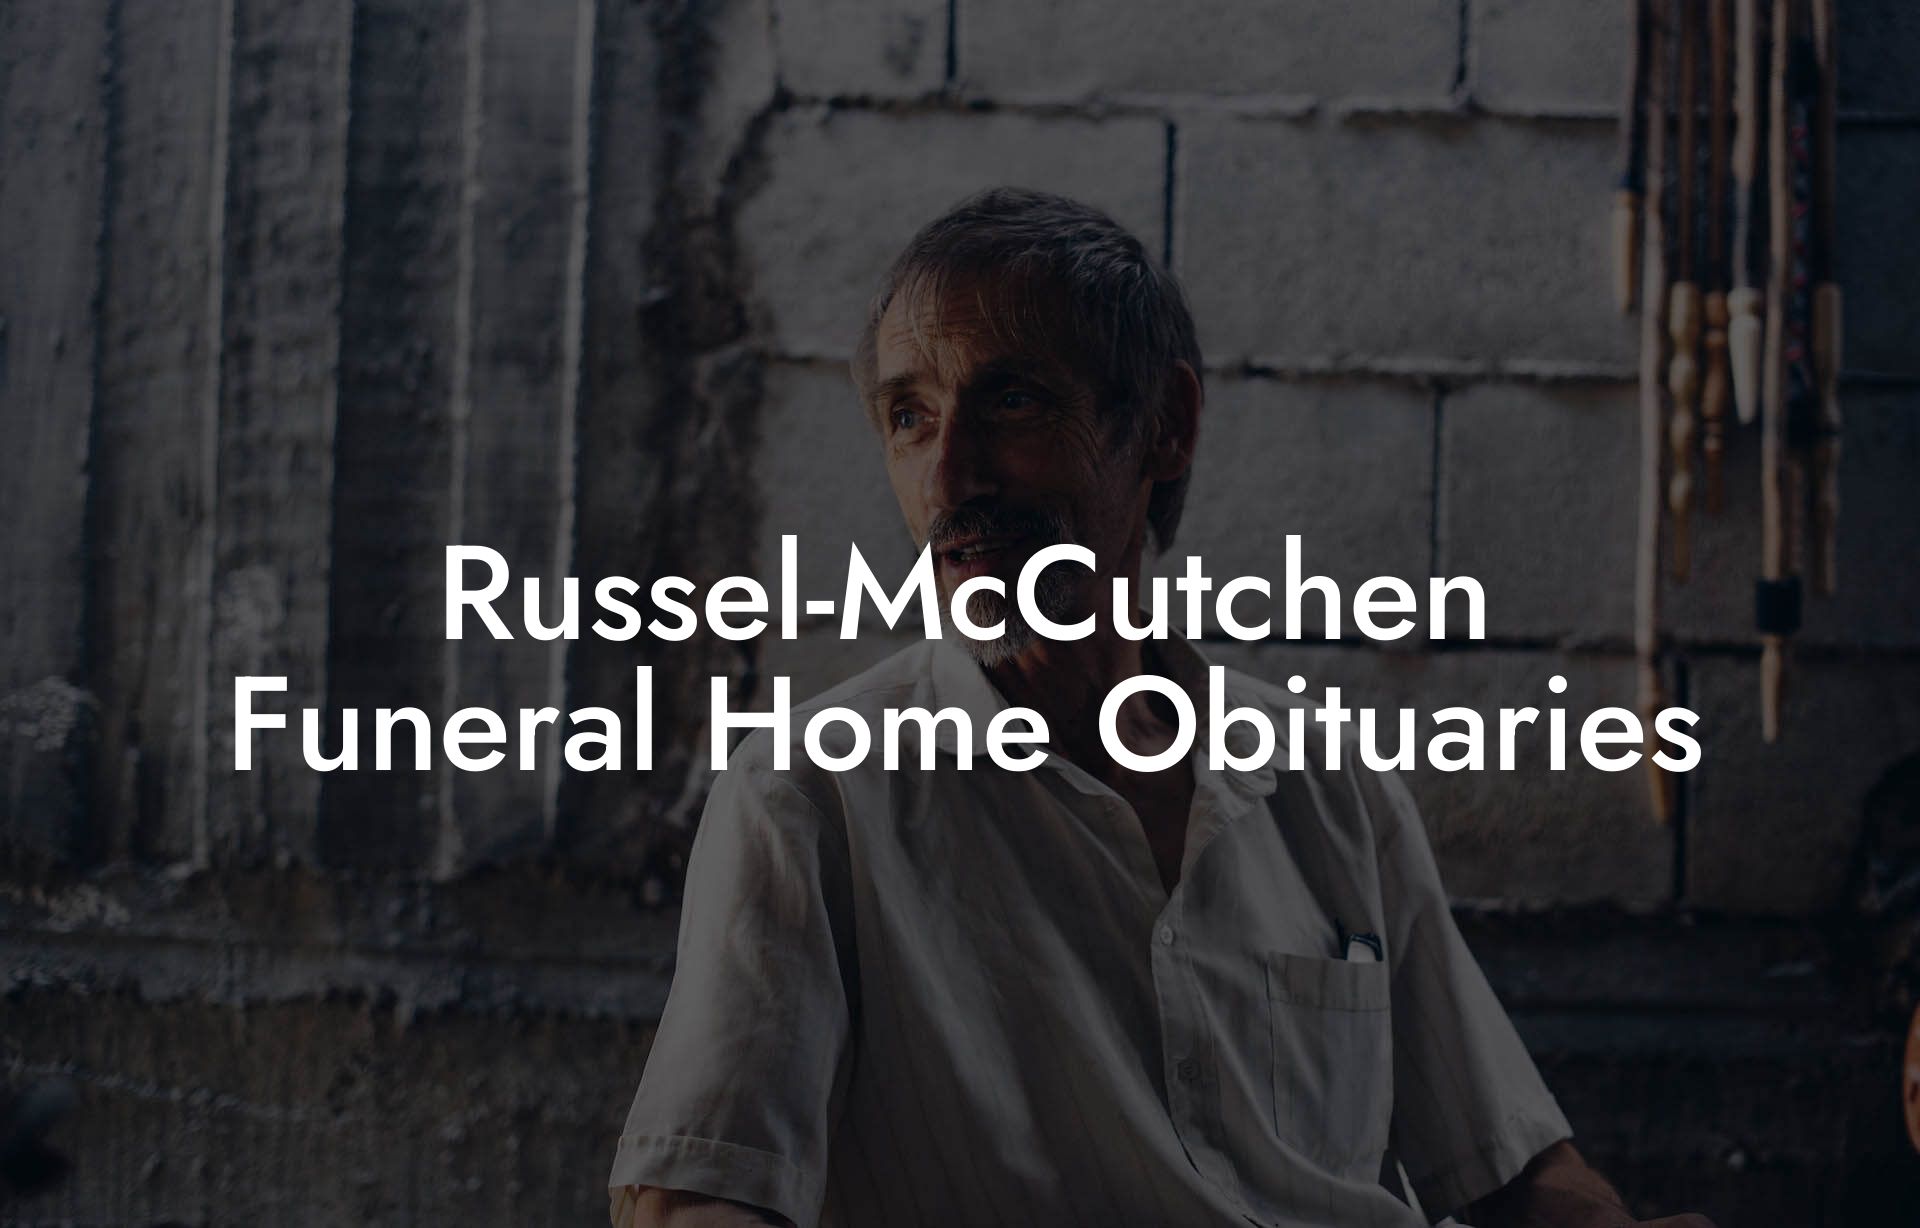 Russel-McCutchen Funeral Home Obituaries